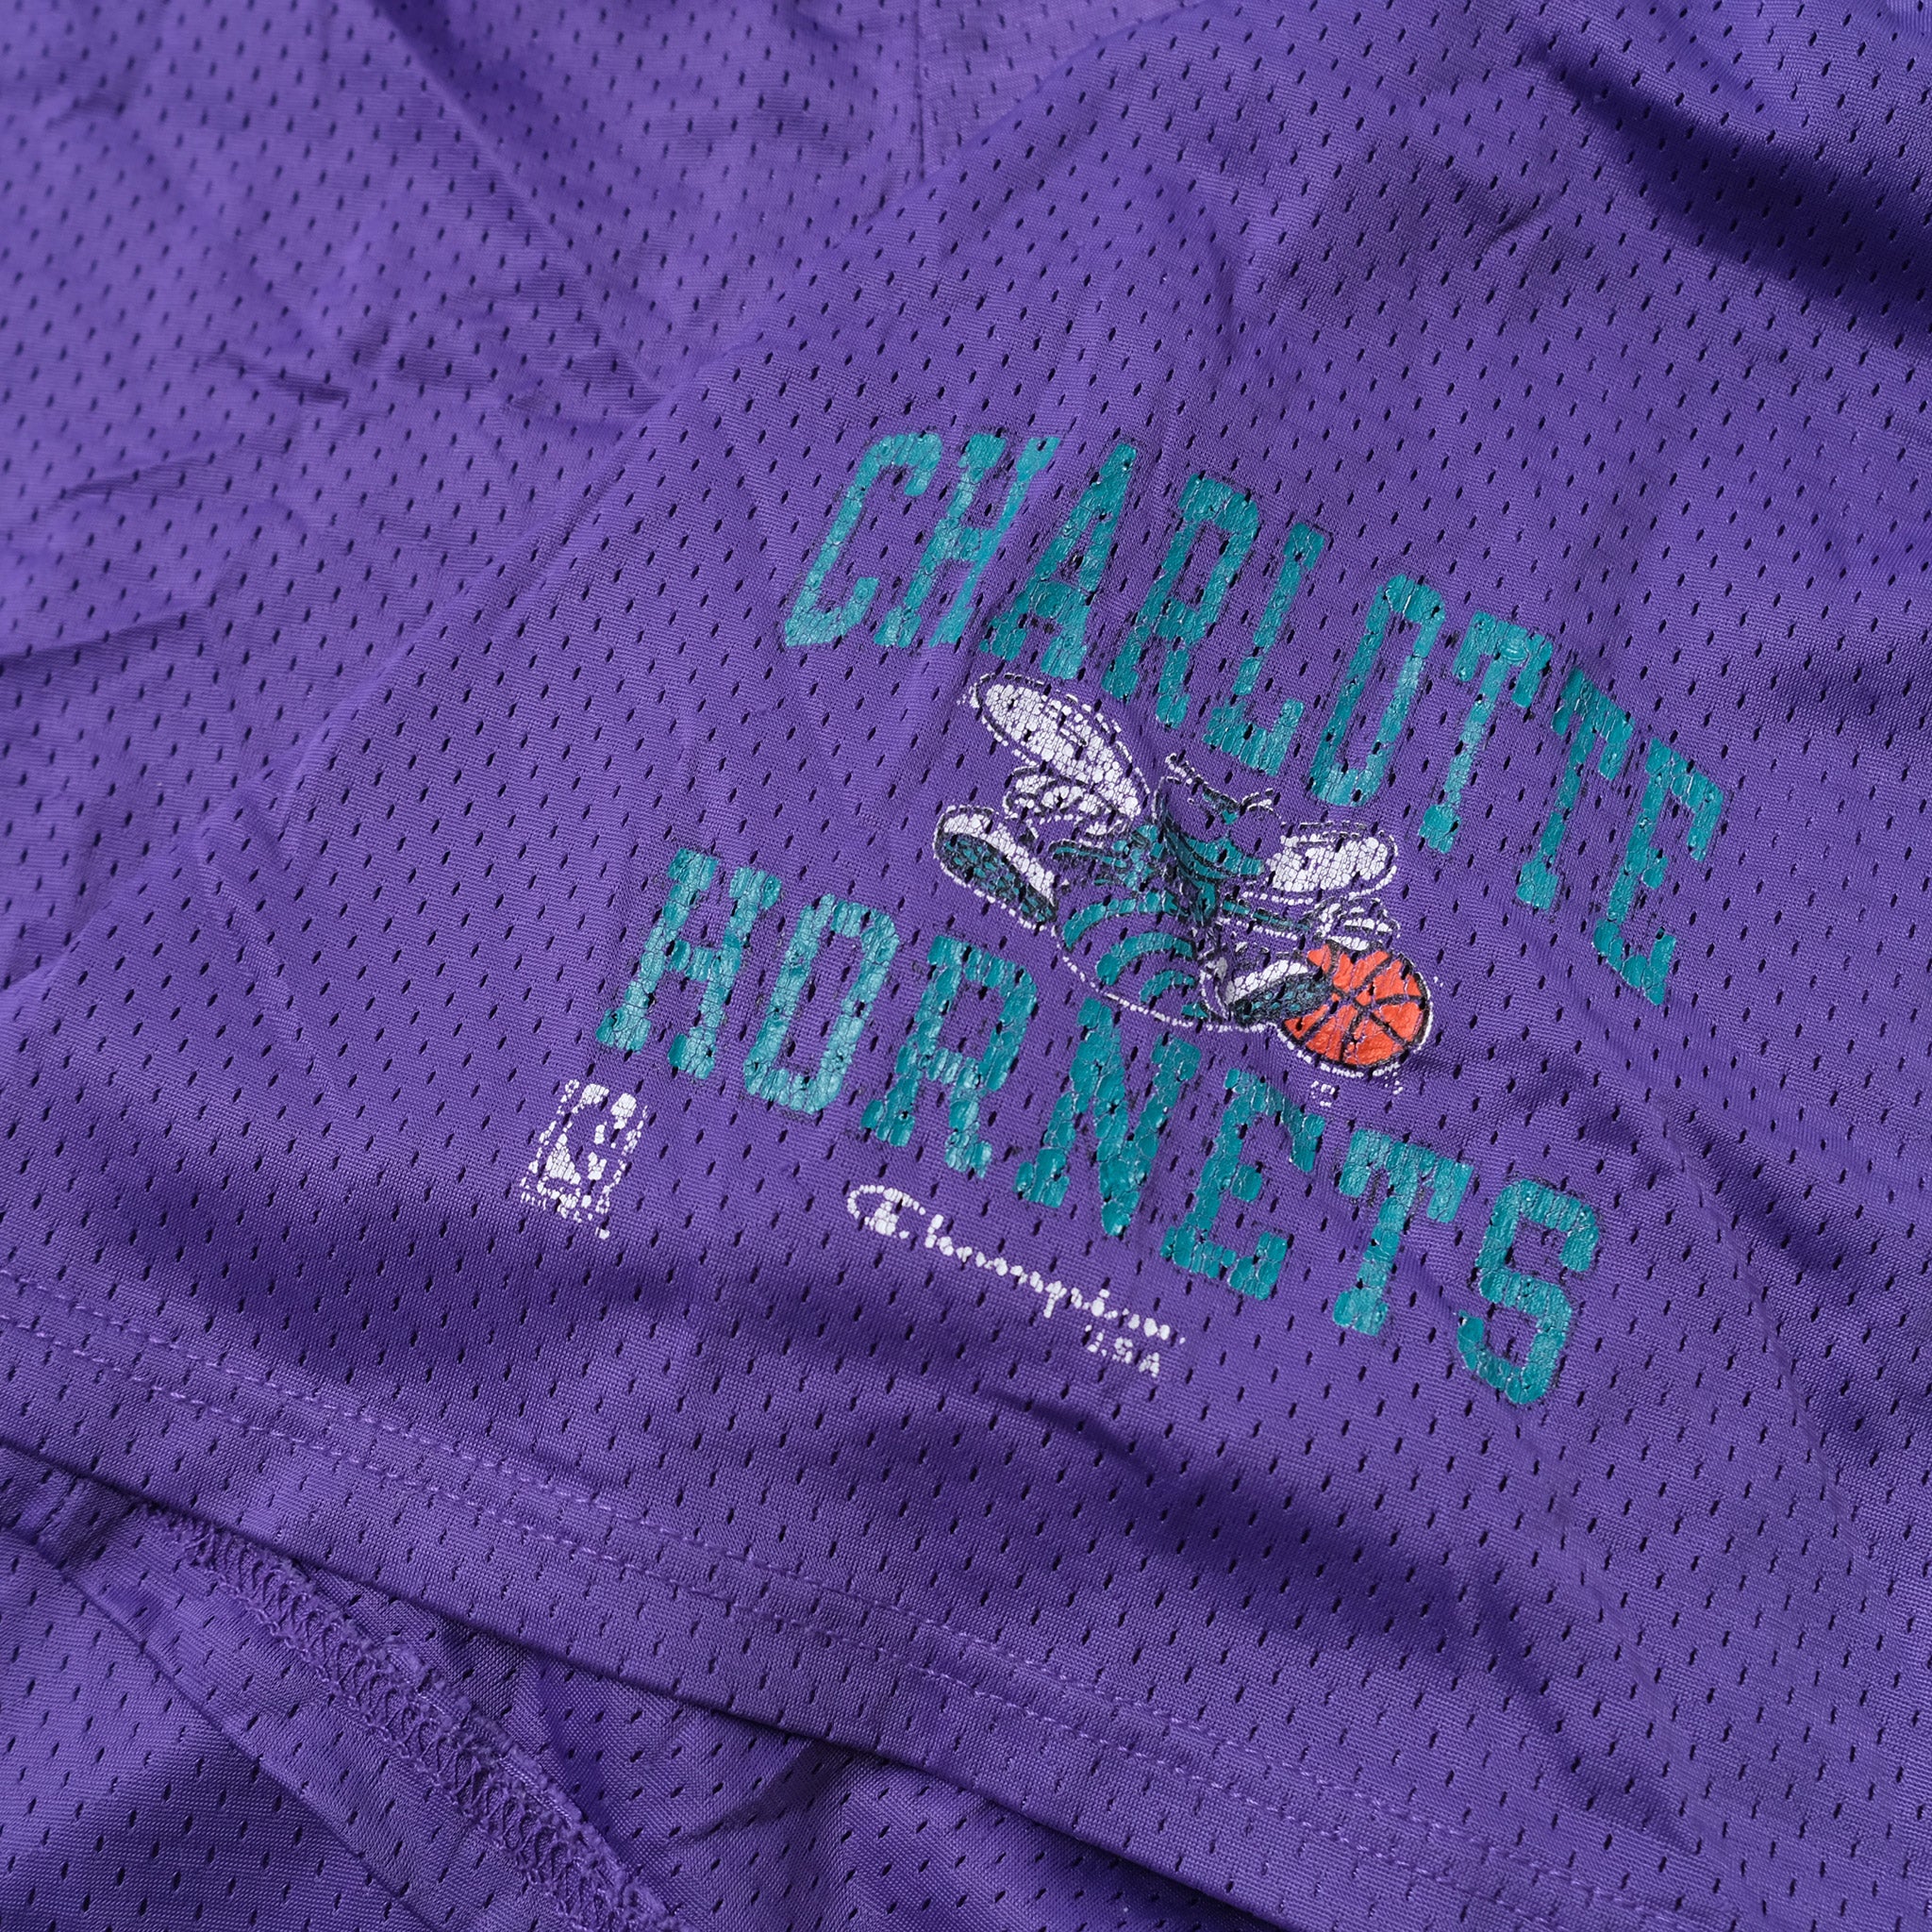 Charlotte Hornets Basketball Shorts – VintageFolk